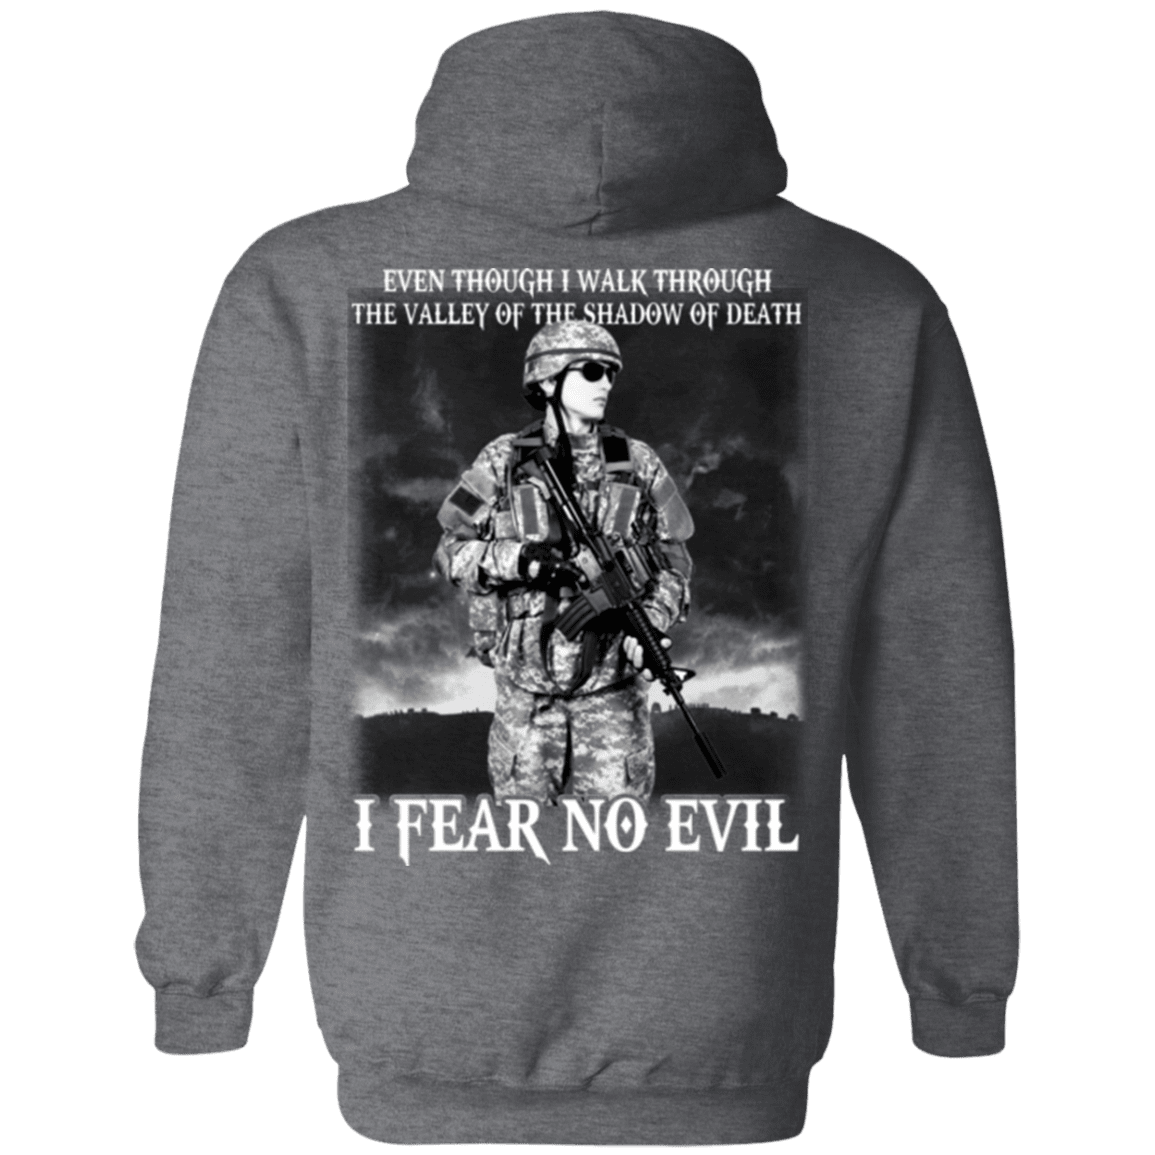 Military T-Shirt "I Fear No Evil Female Veteran Design" On Back-TShirt-General-Veterans Nation